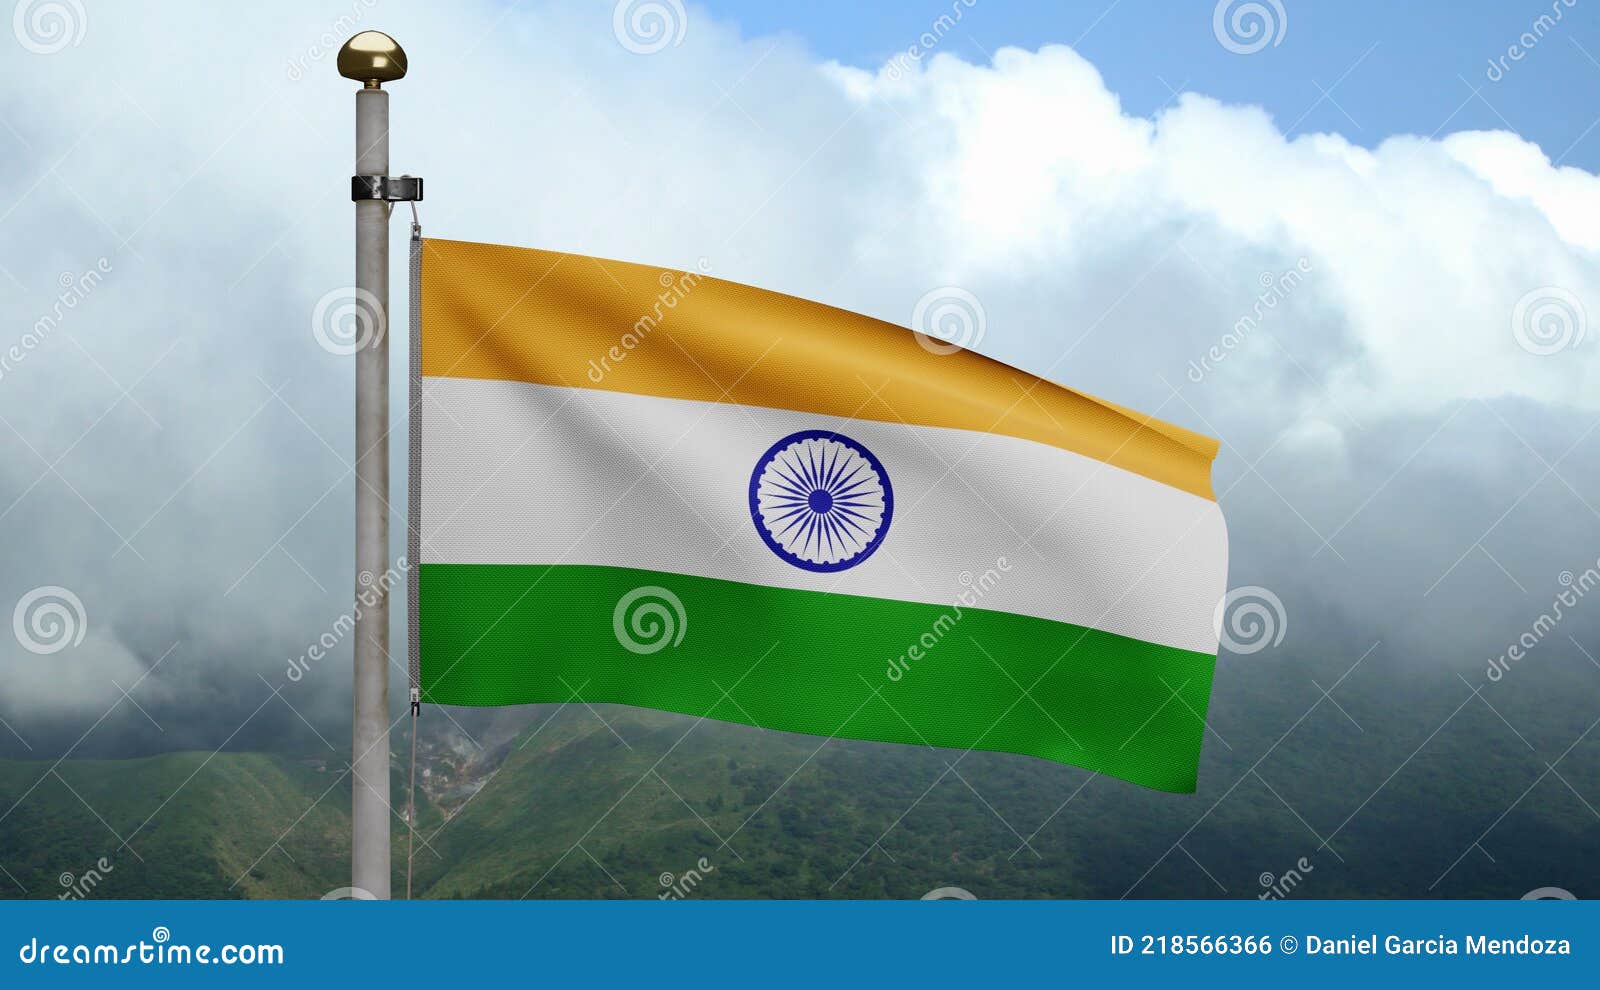 29 Indian Flag Bg Images Stock Photos  Vectors  Shutterstock